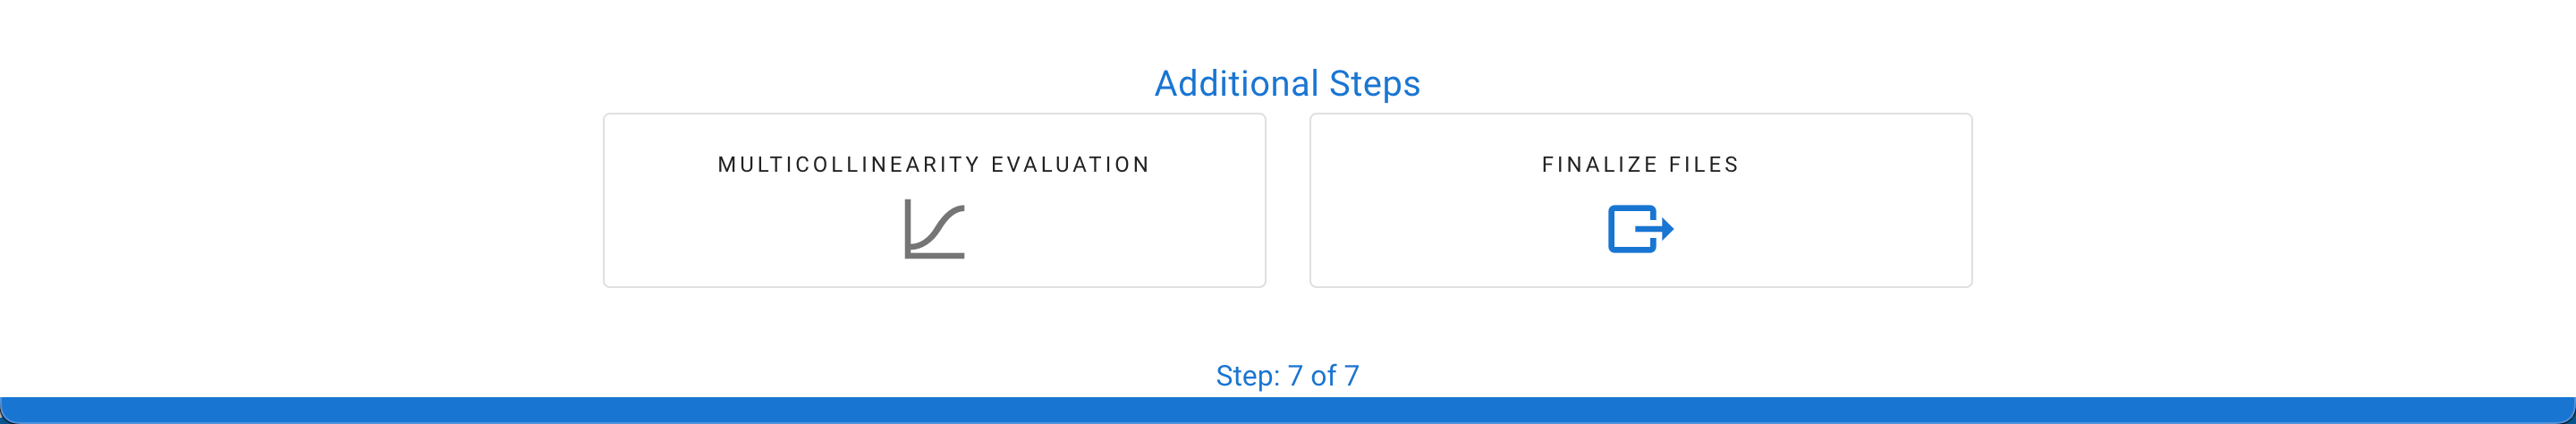 Selecting Optional Additional Steps